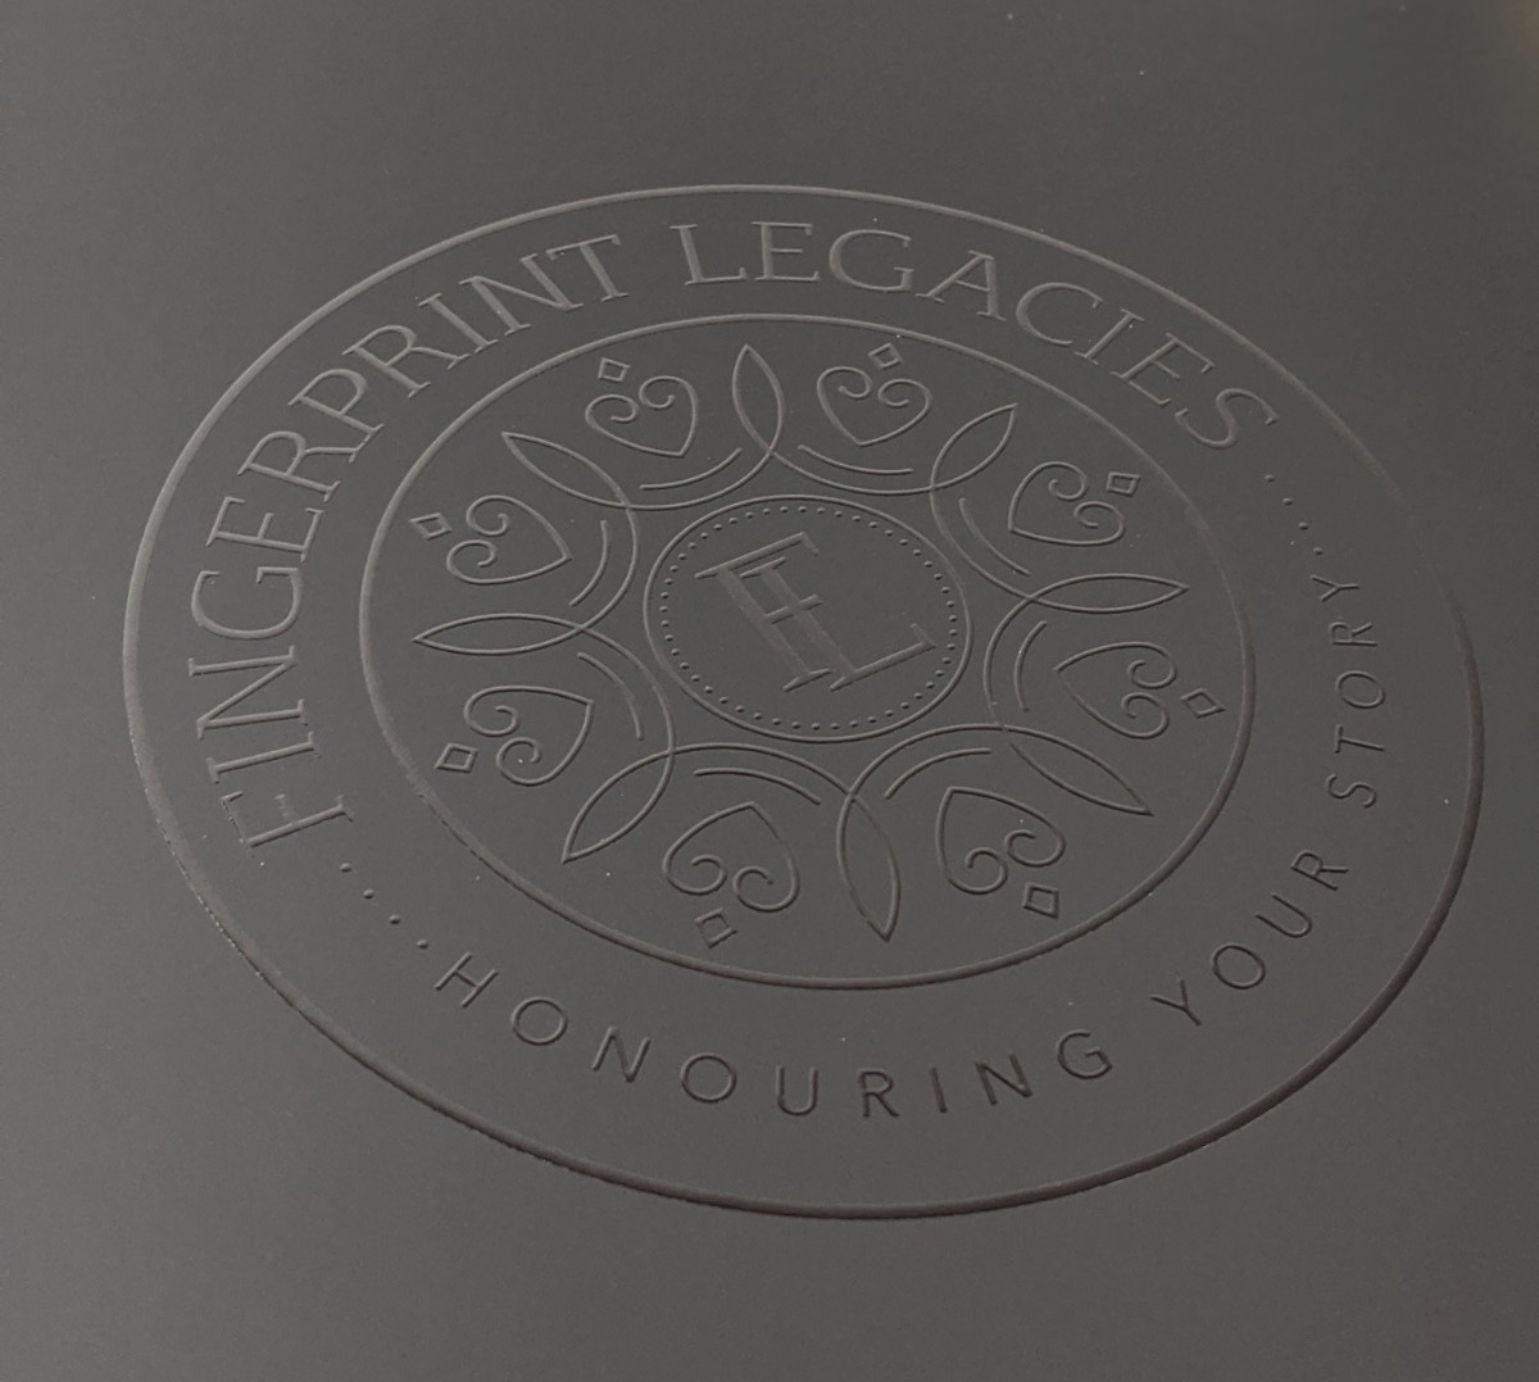 Fingerprint Legacies logo